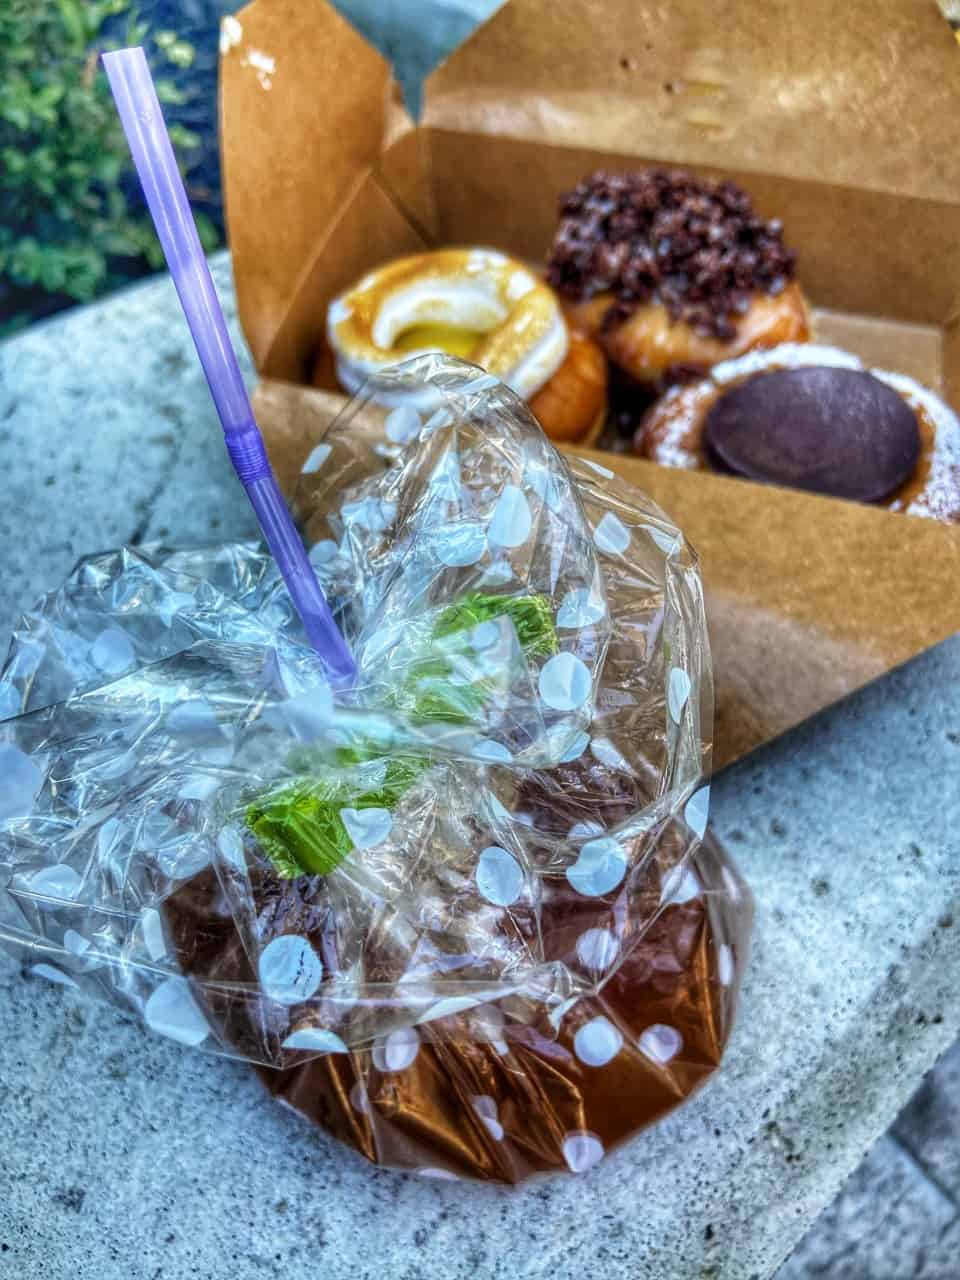 Smorgasburg Toronto Baker-Rae - Calamansi Cold Brew Tonic - typical Asian street food - drink in a bag

